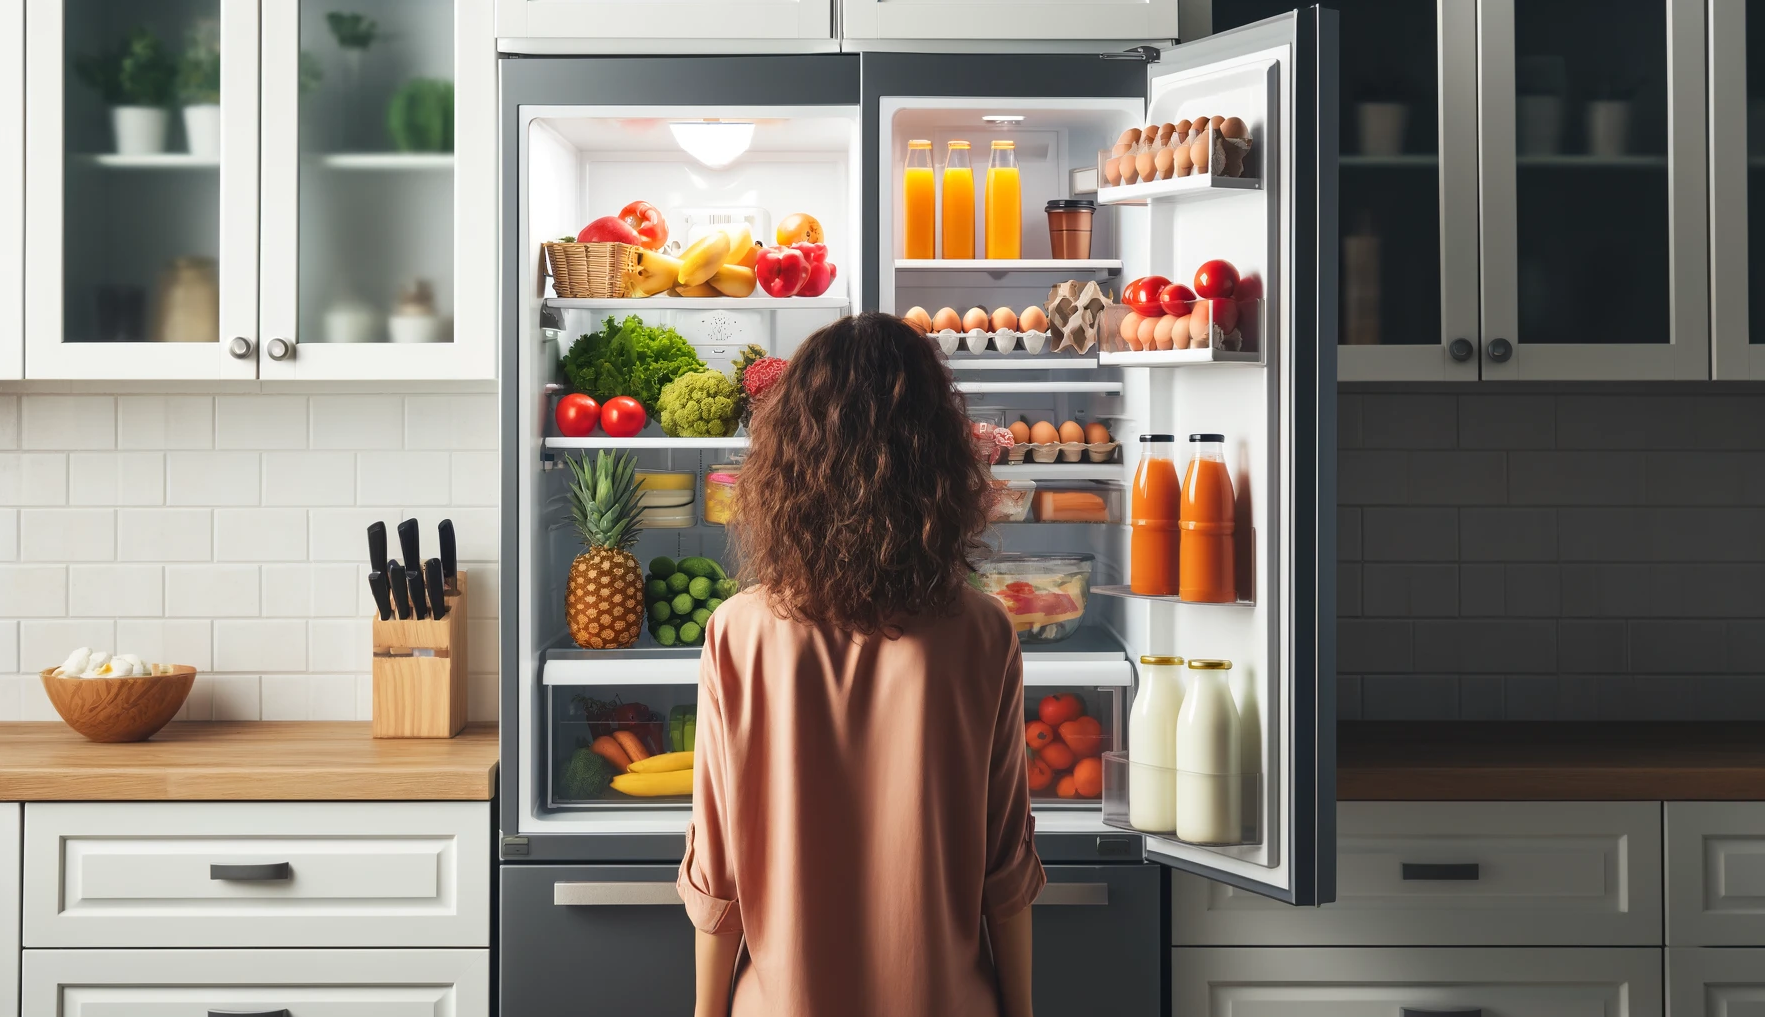 Organized refrigerator view